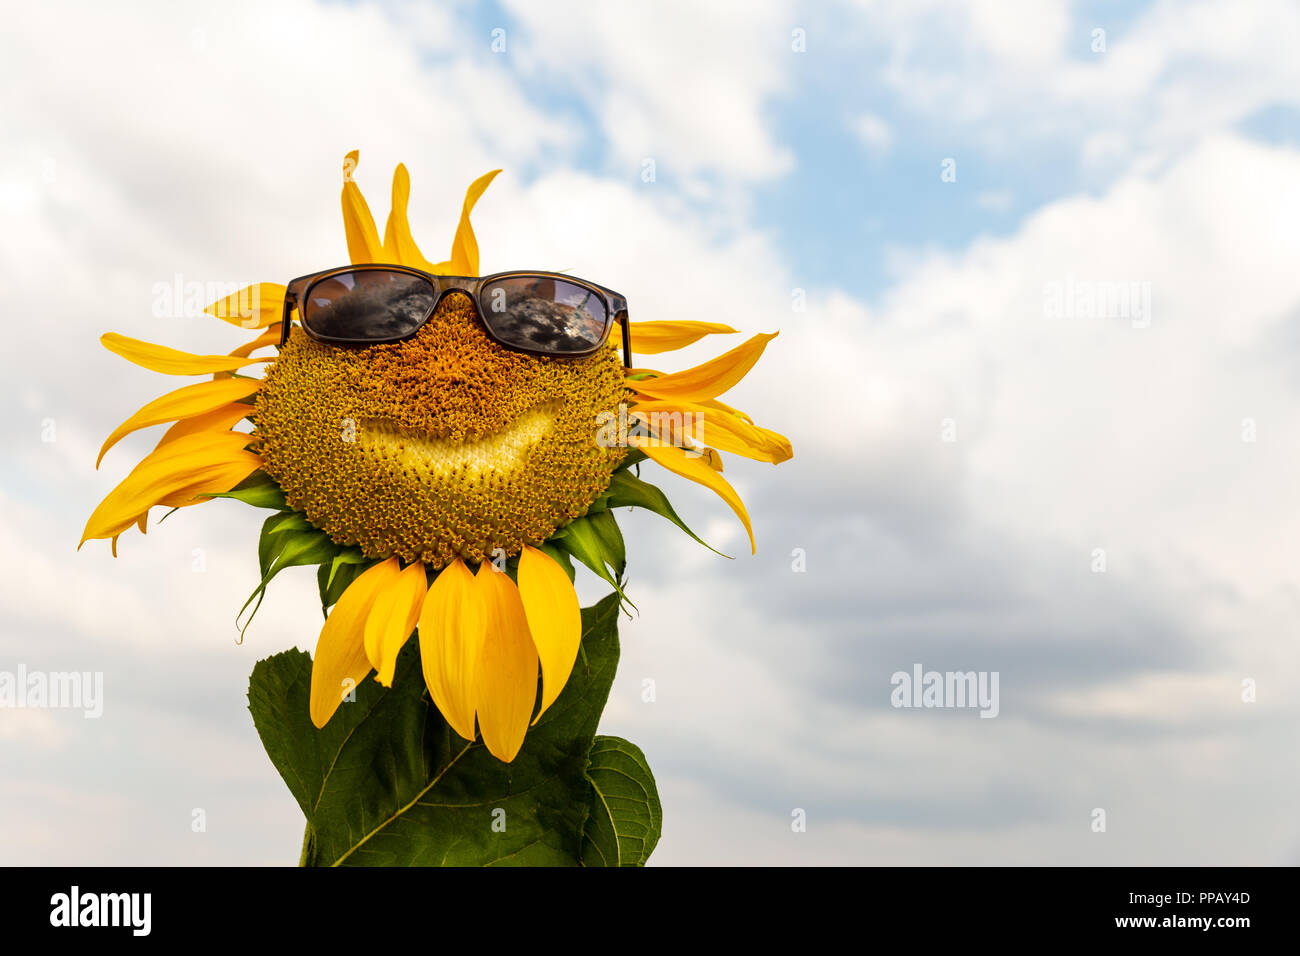 Smiled Sunflower wearing sunglasses. Stock Photo